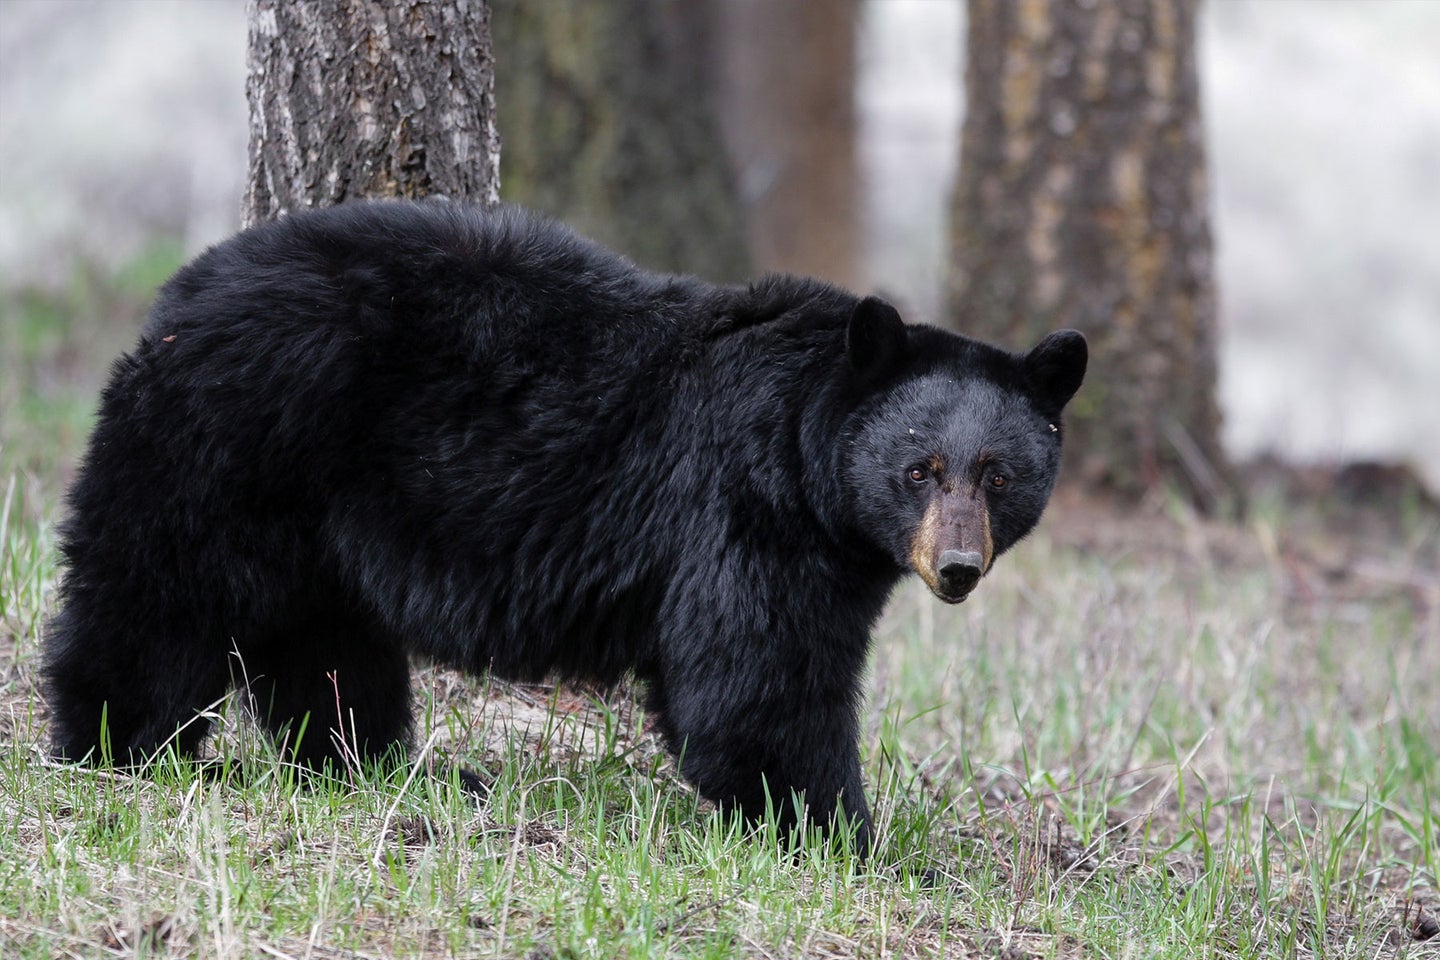 Black bear walks through wooded area.